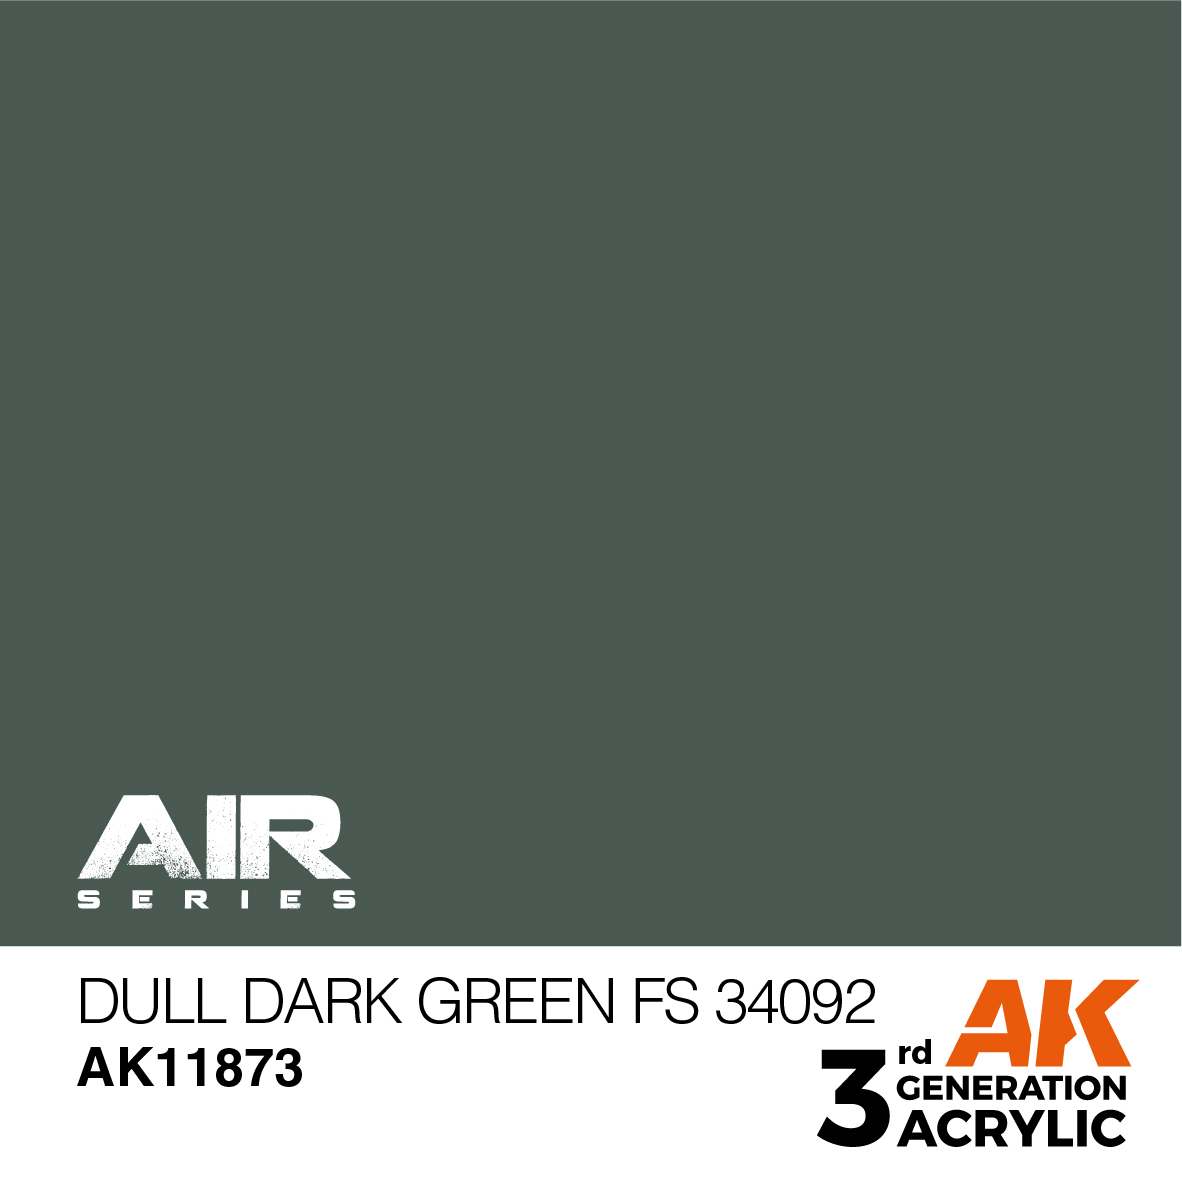 Dull Dark Green FS 34092 – AIR